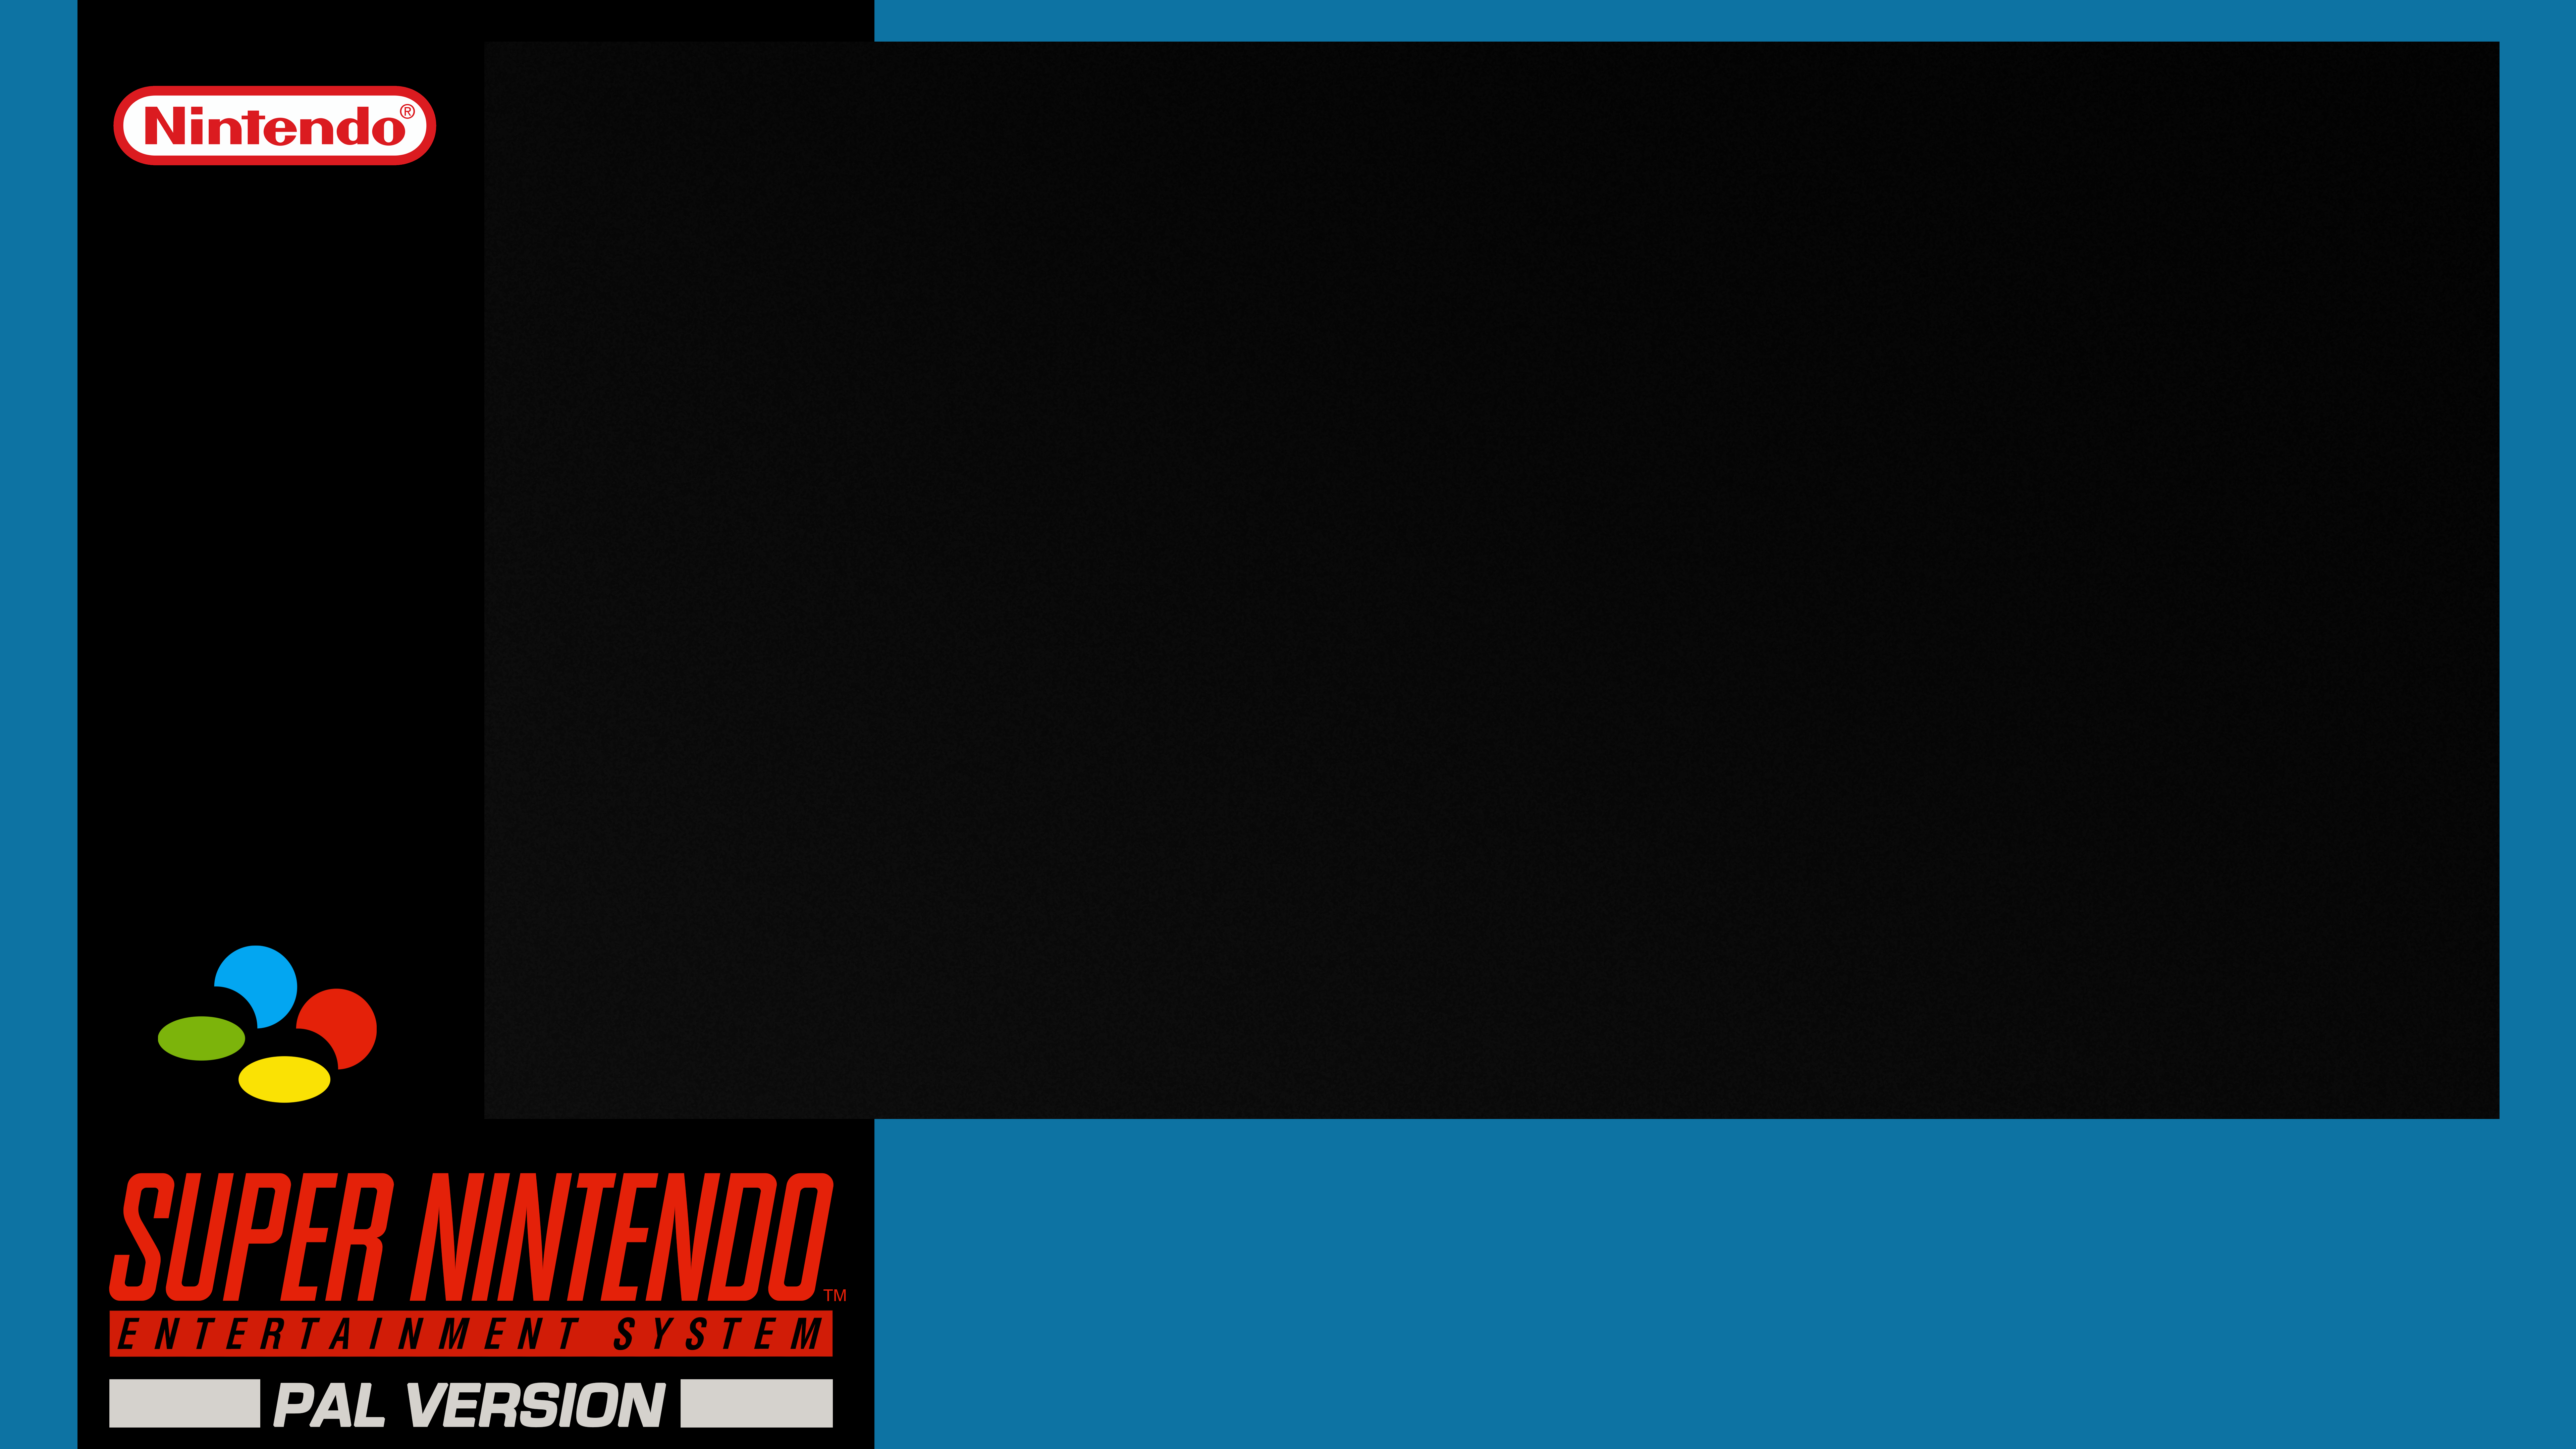 General 7680x4320 SNES Nintendo retro games video games simple background logo